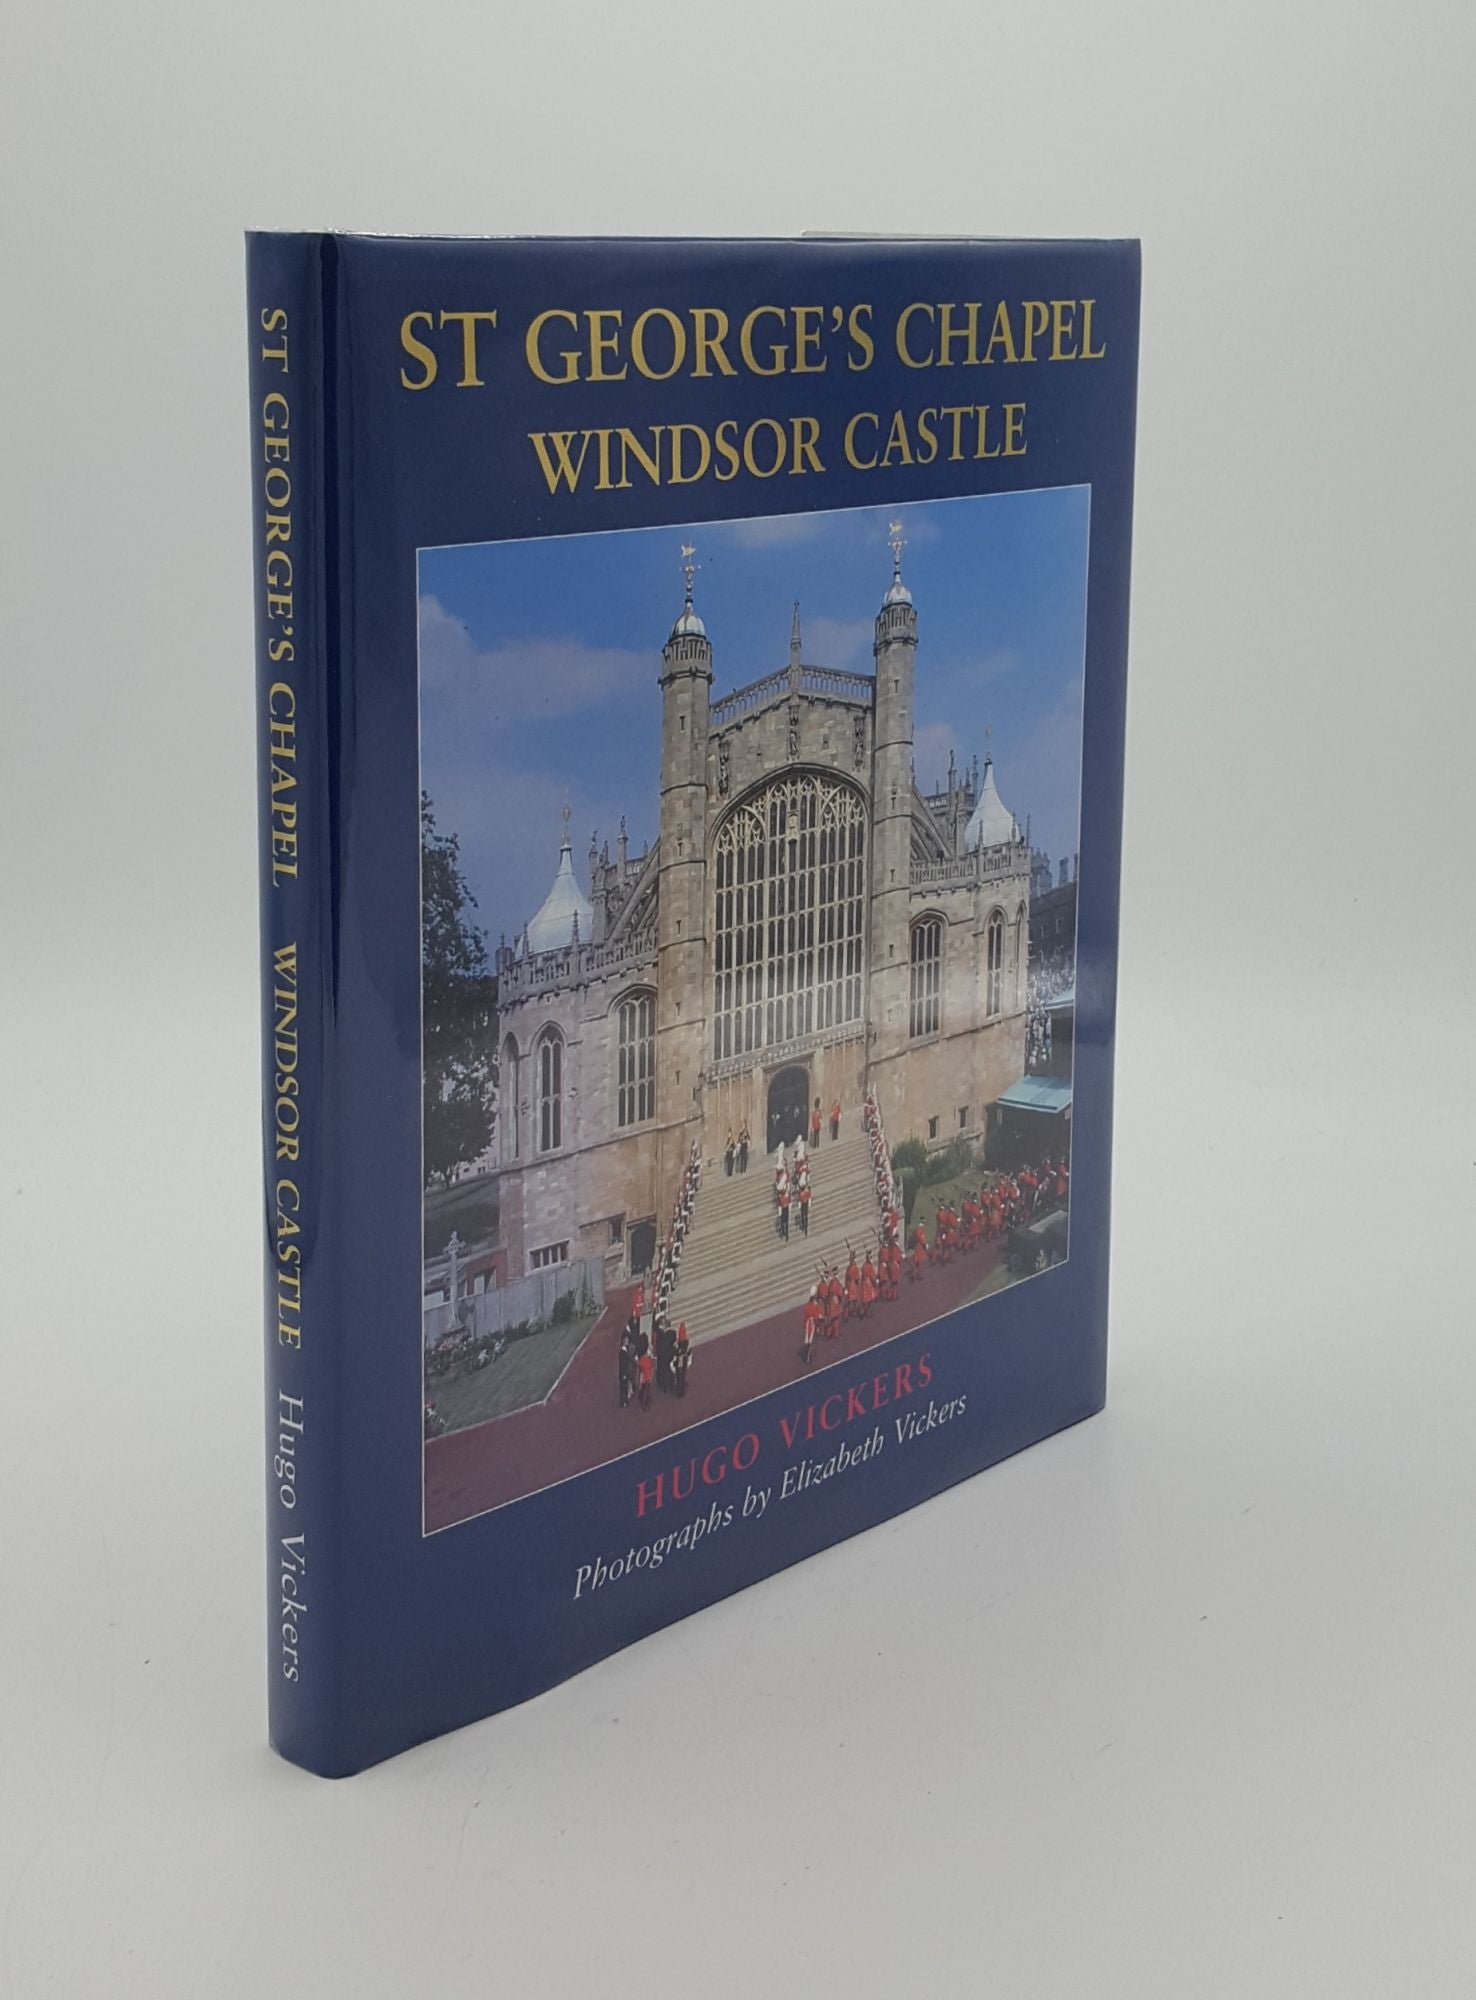 VICKERS Hugo, VICKERS Elizabeth - St George's Chapel Windsor Castle